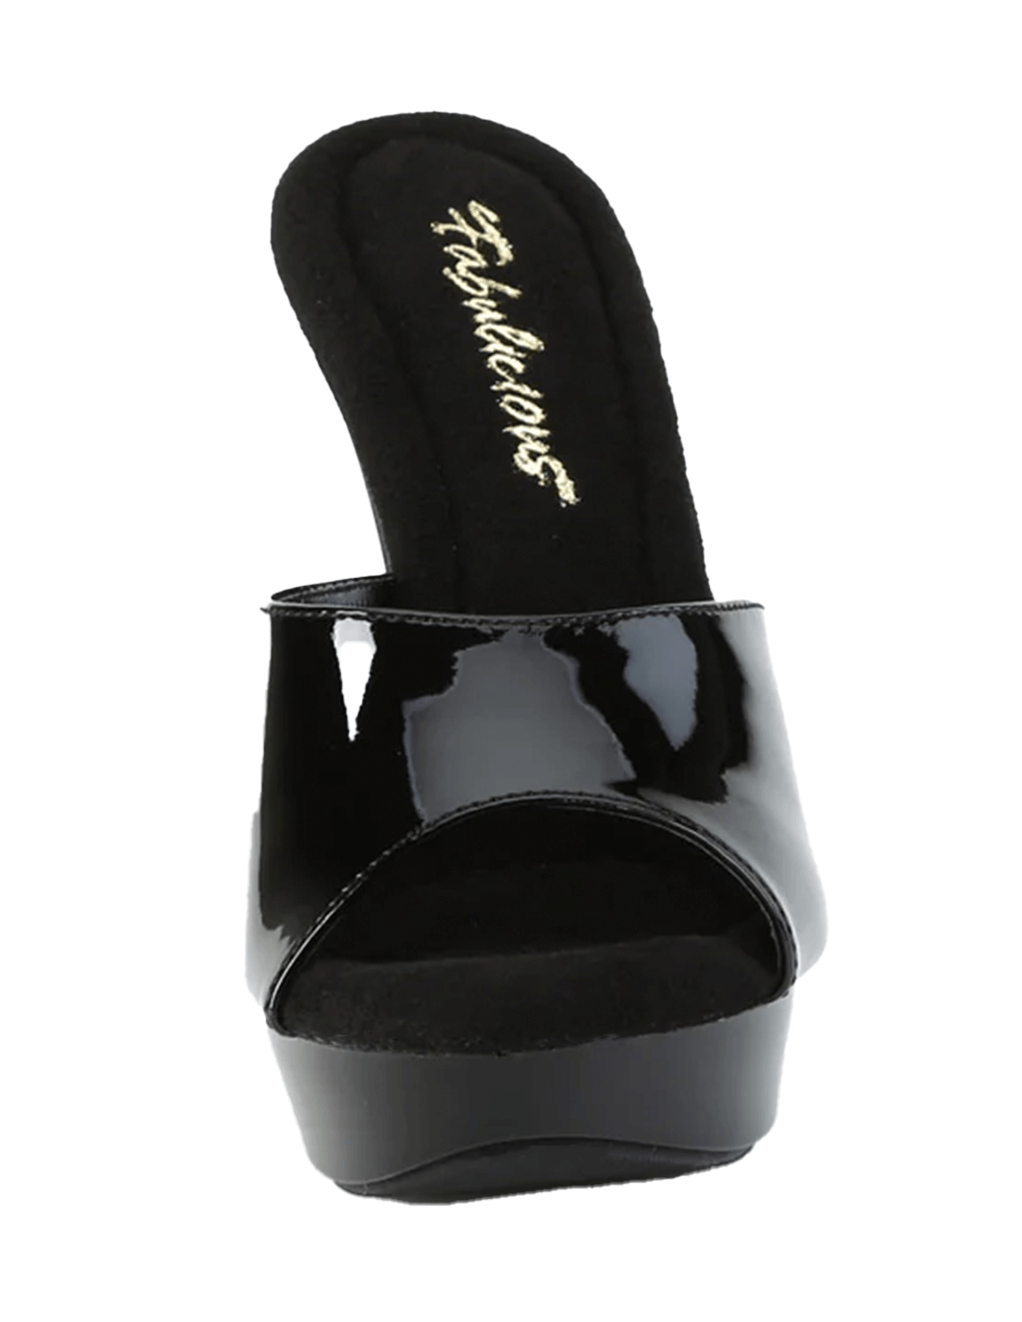  Cocktail-501 Peep Toe Slide Heel - Black/Black - Front